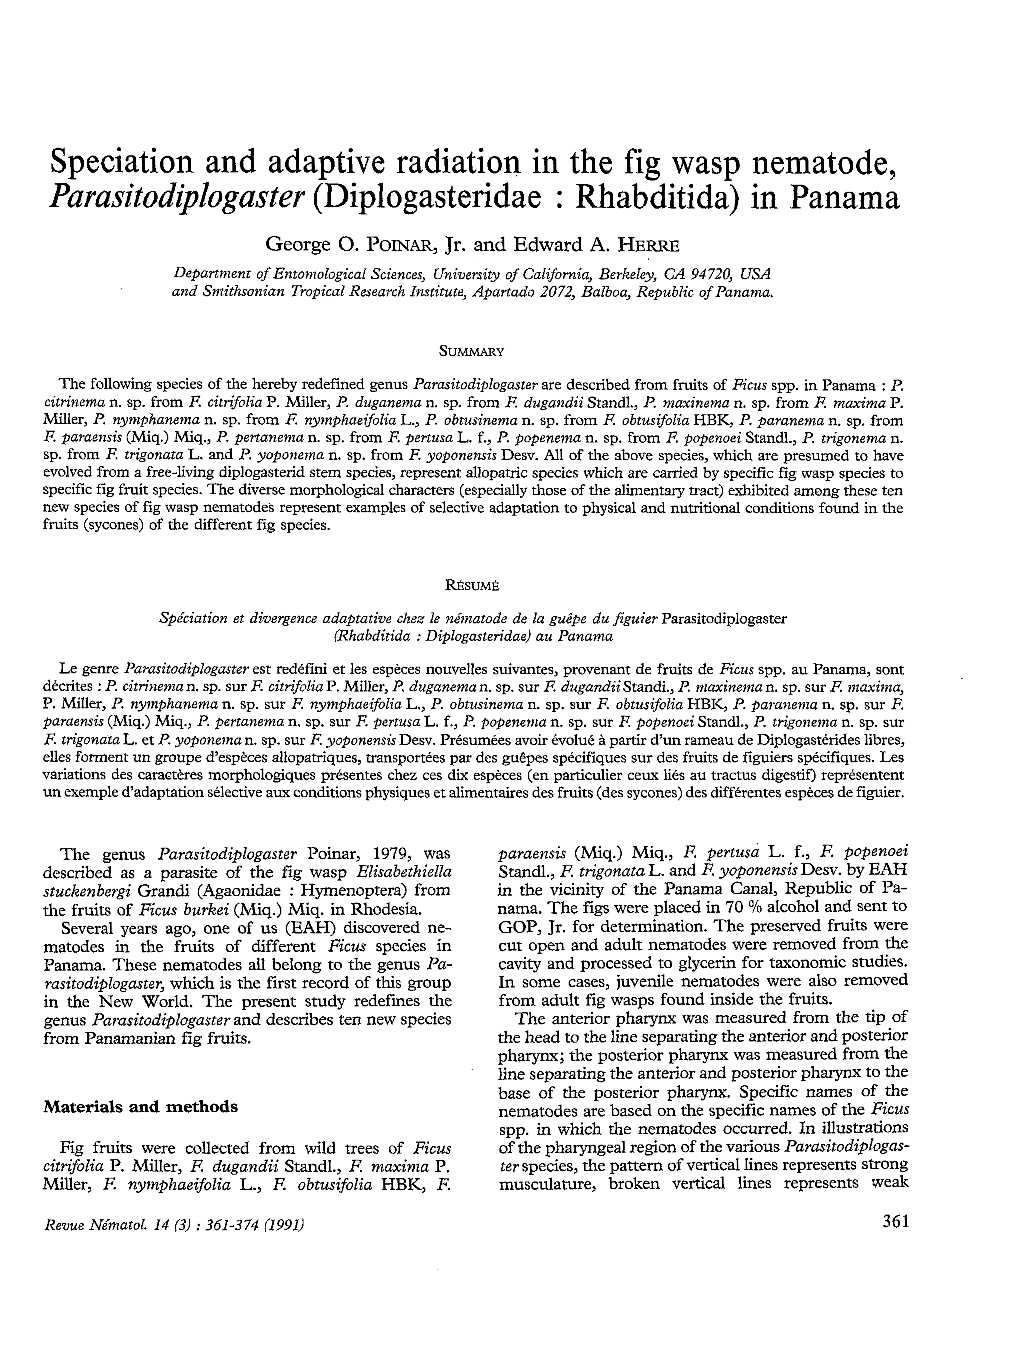 Speciation and Adaptive Radiation in the Fig Wasp Nematode, Parasitodiplagaster (Diplogasteridae : Rhabditida) in Panama George O